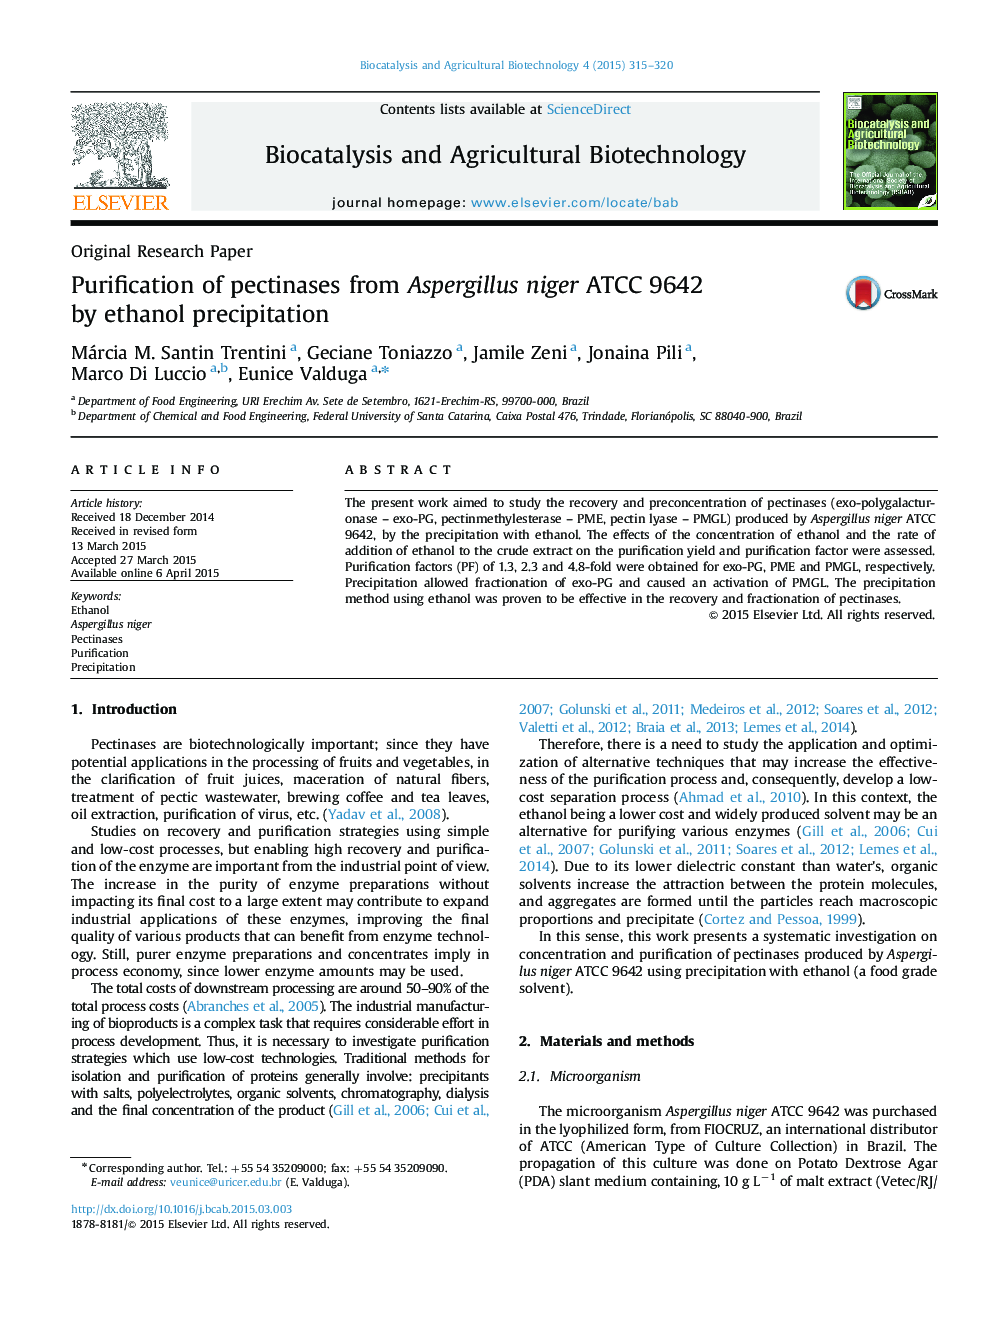 Purification of pectinases from Aspergillus niger ATCC 9642 by ethanol precipitation